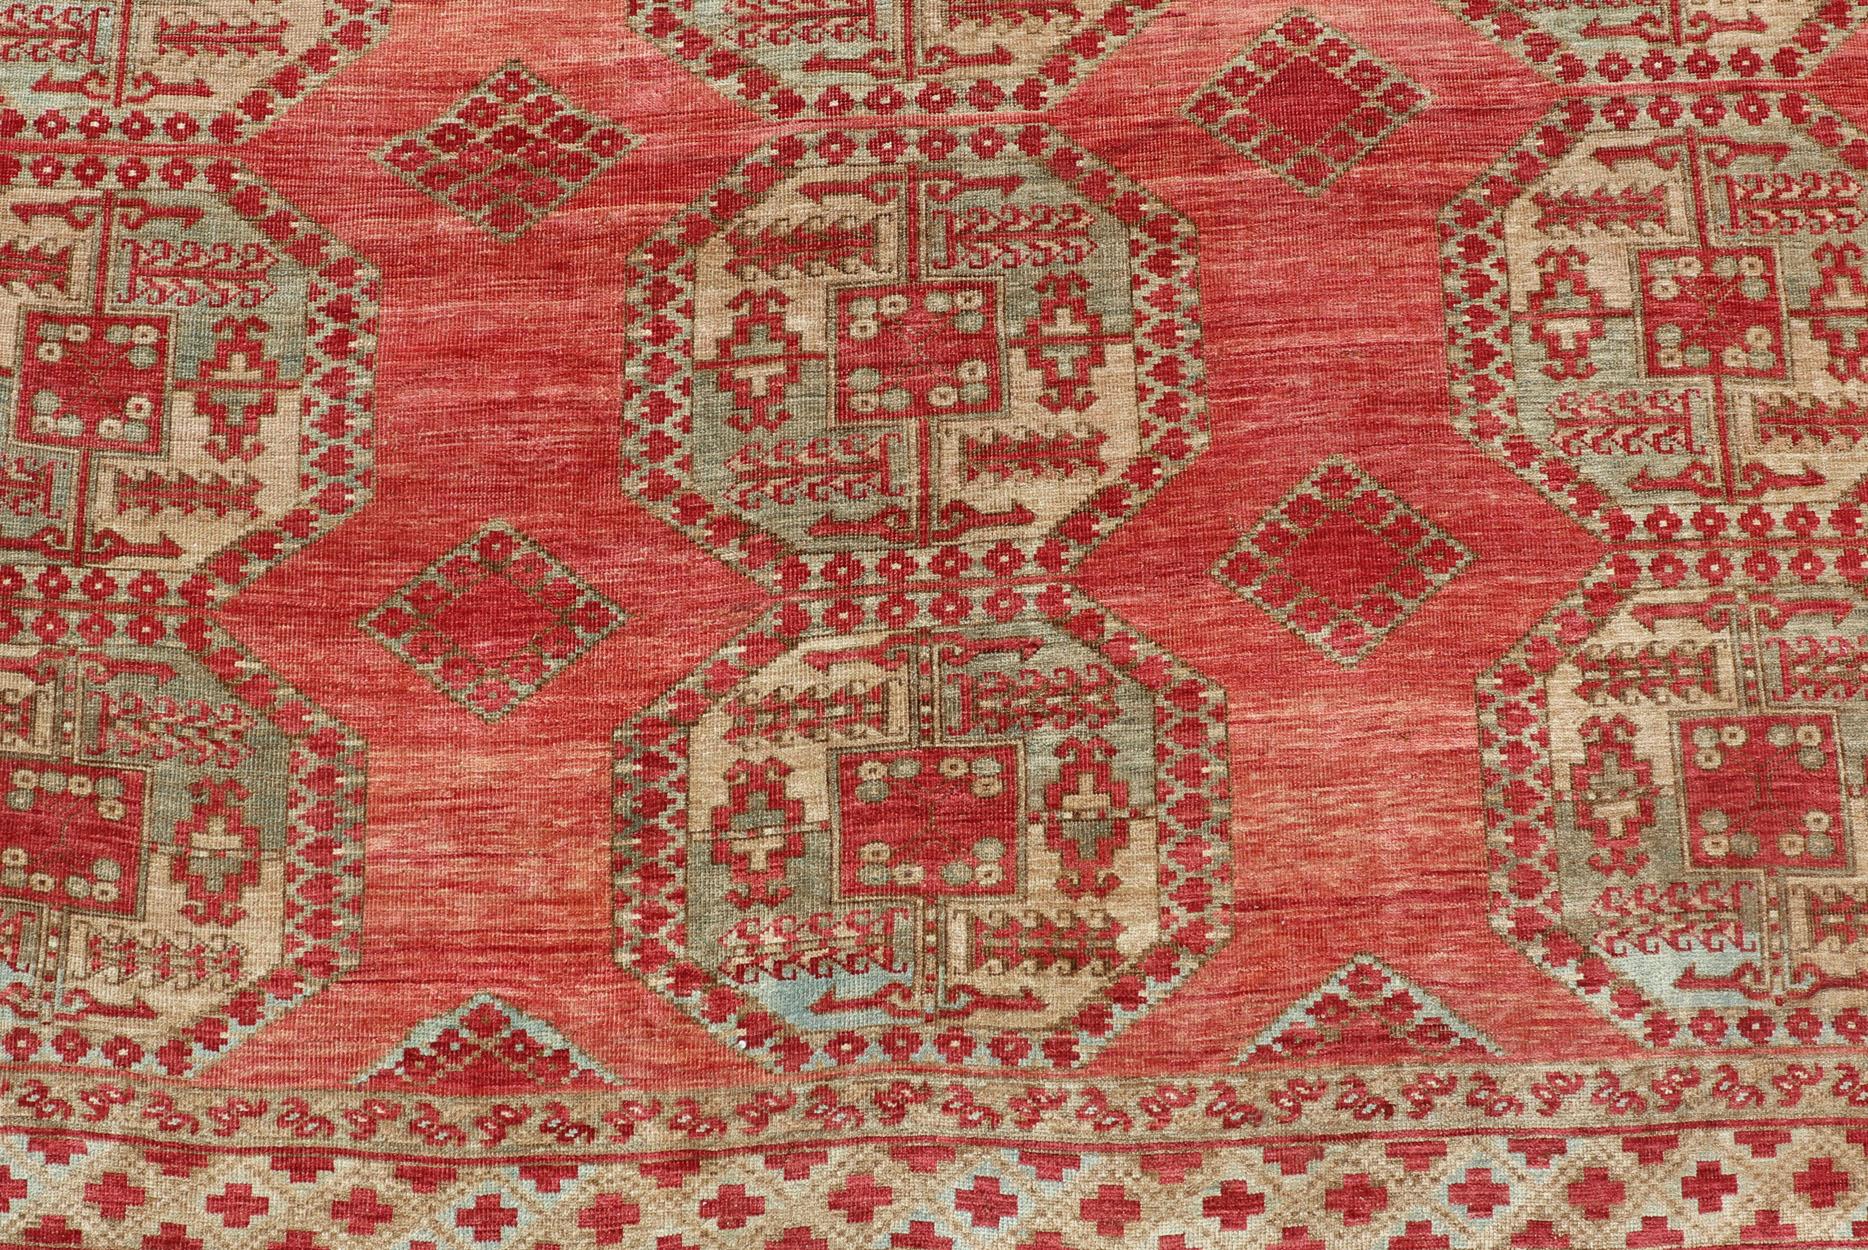 Antique Turkomen Ersari rug with Repeating Gul Design in soft red background, green, light blue, butter yellow. Hand-Knotted Ersari Rug. Keivan Woven Arts; rug EMB-9656-P13592, country of origin / type: Turkestan / Ersari, circa 1930s.

Measures: